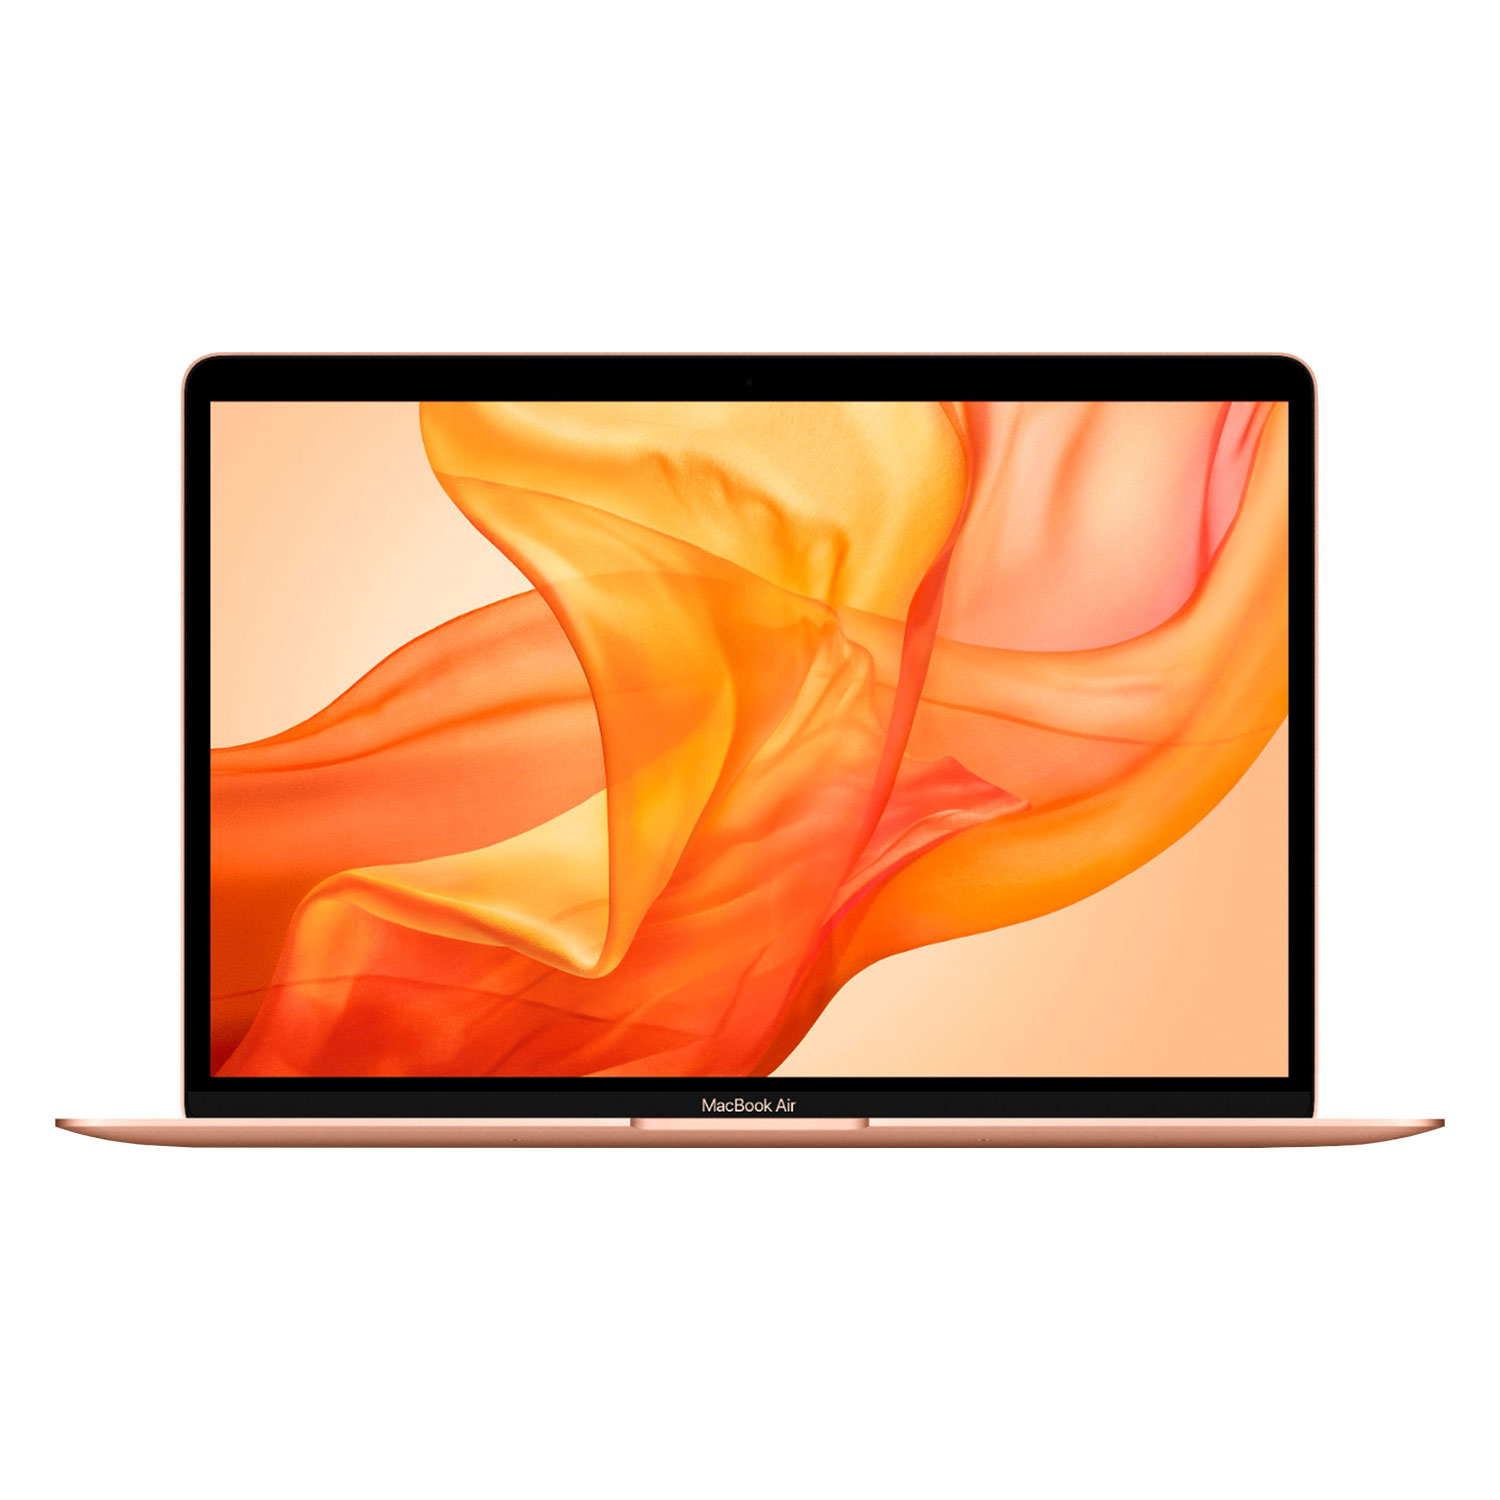 Apple Macbook Air Z12A0006C M1 / Memória RAM 8GB / SSD 256GB / Tela 13.3" - Gold (2020)
